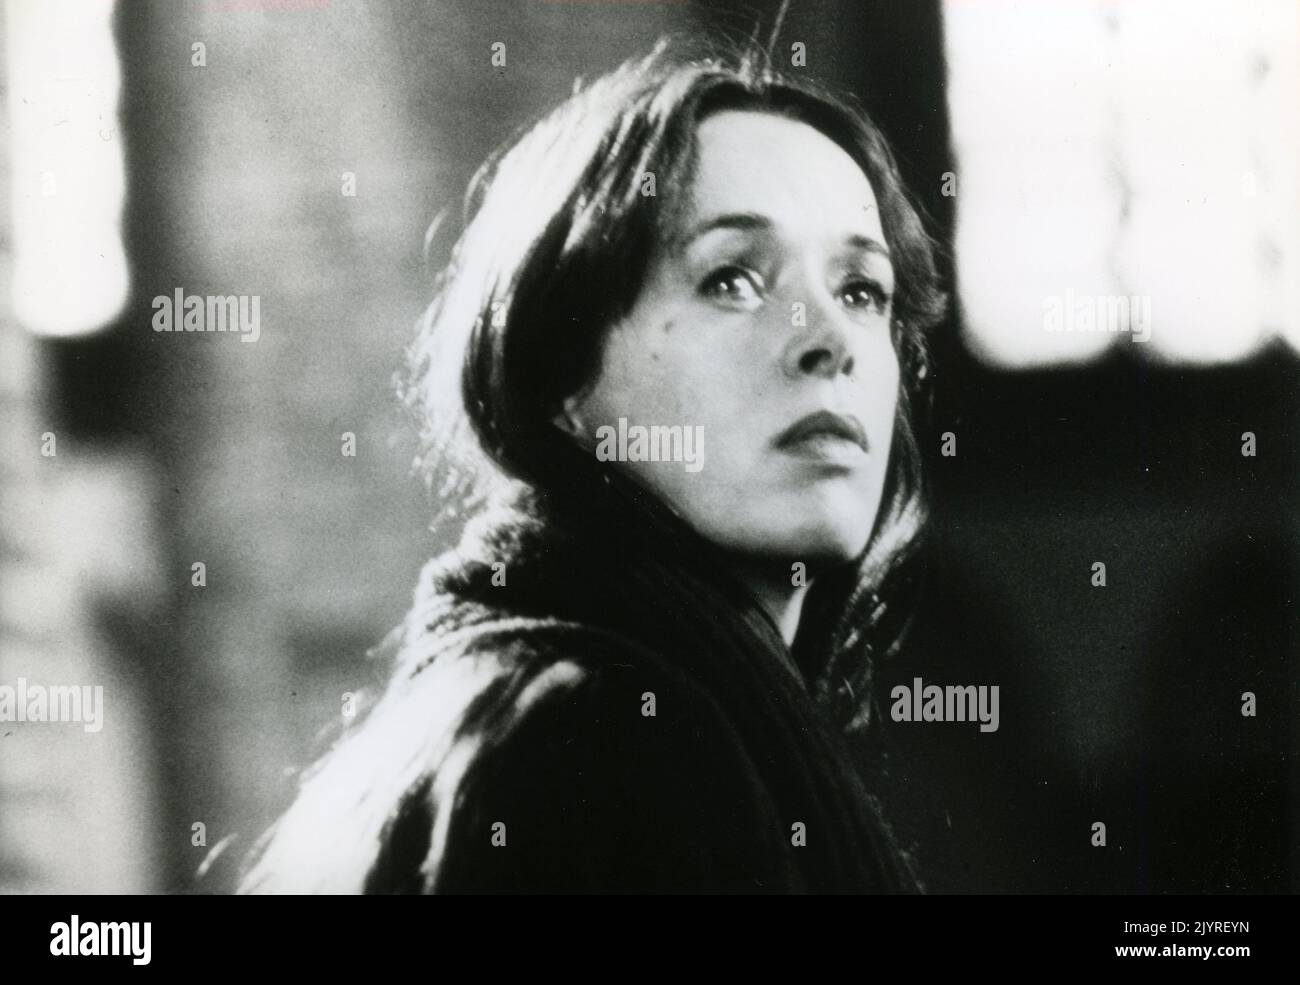 German actress Jutta Lampe in the movie Marianne and Juliane (Die bleierne Zeit), Germany 1981 Stock Photo